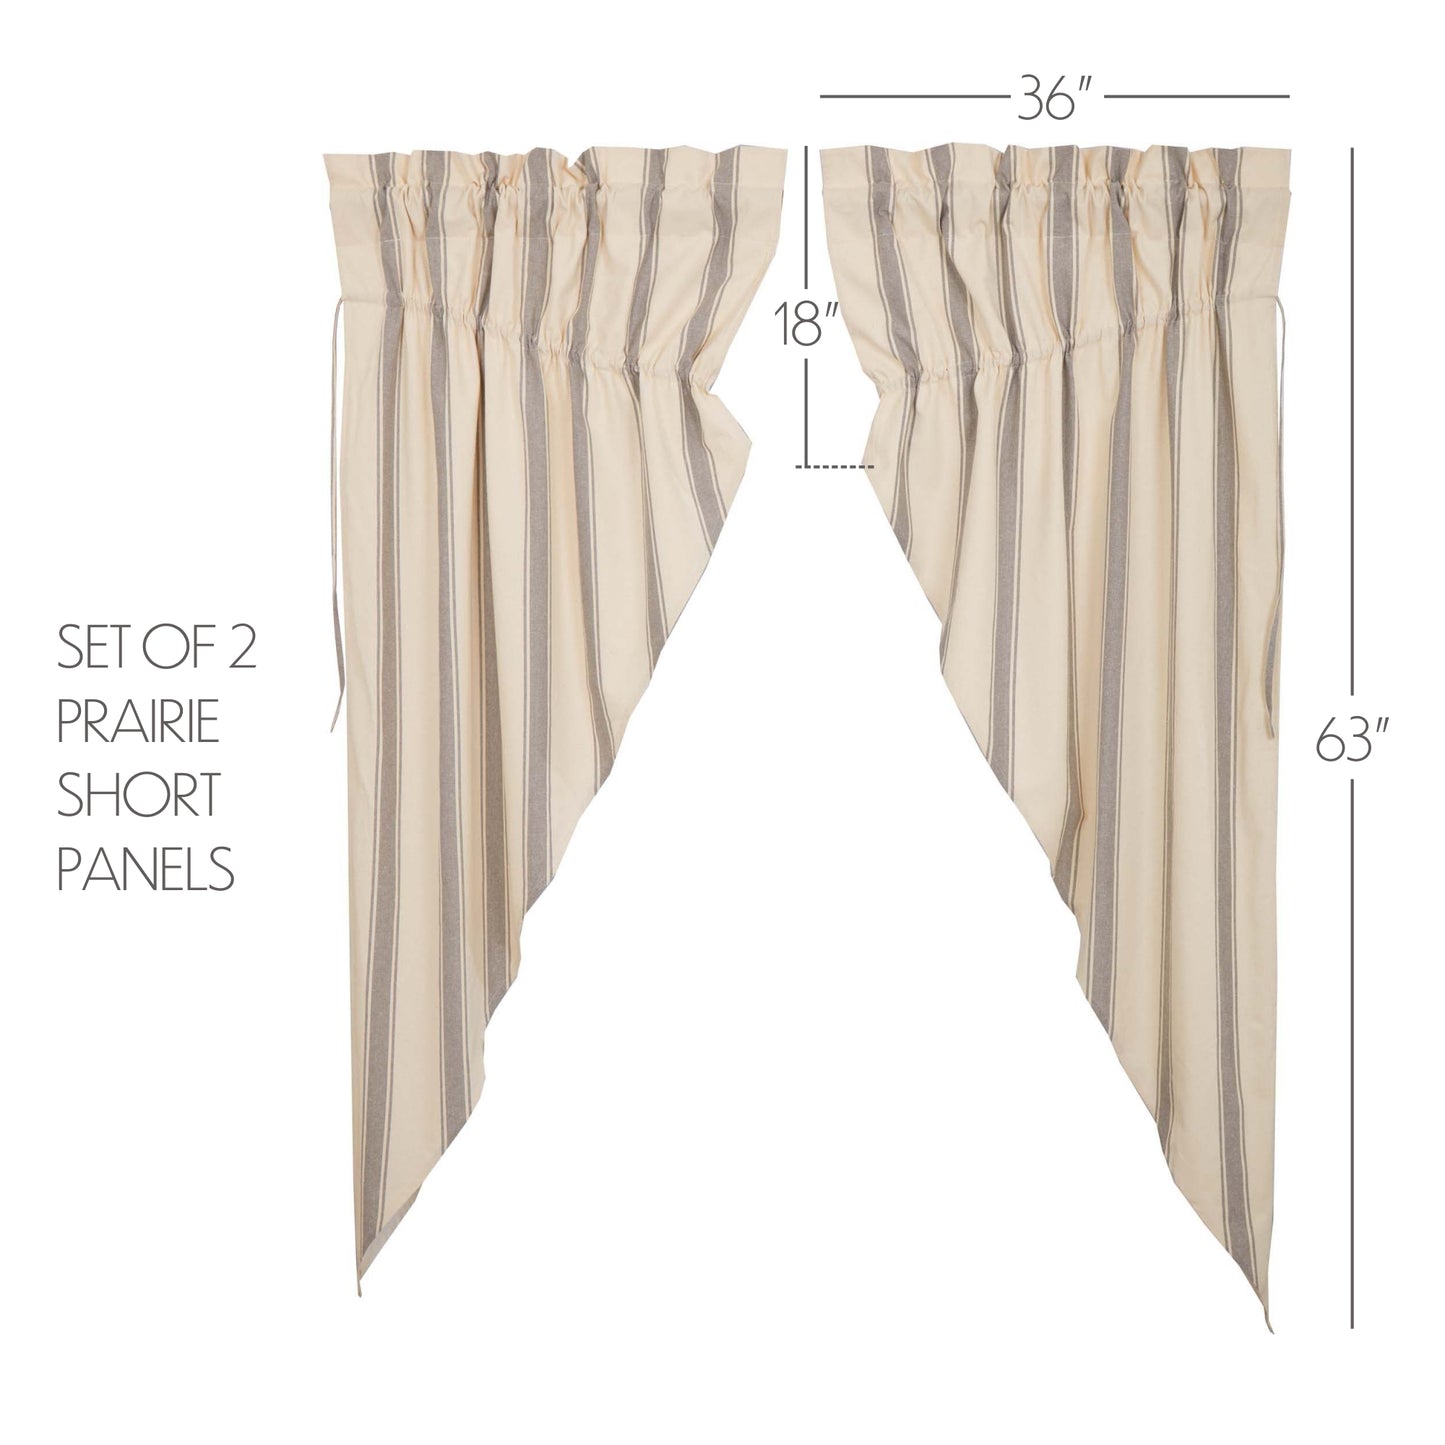 69968-Grace-Grain-Sack-Stripe-Prairie-Short-Panel-Set-of-2-63x36x18-image-1